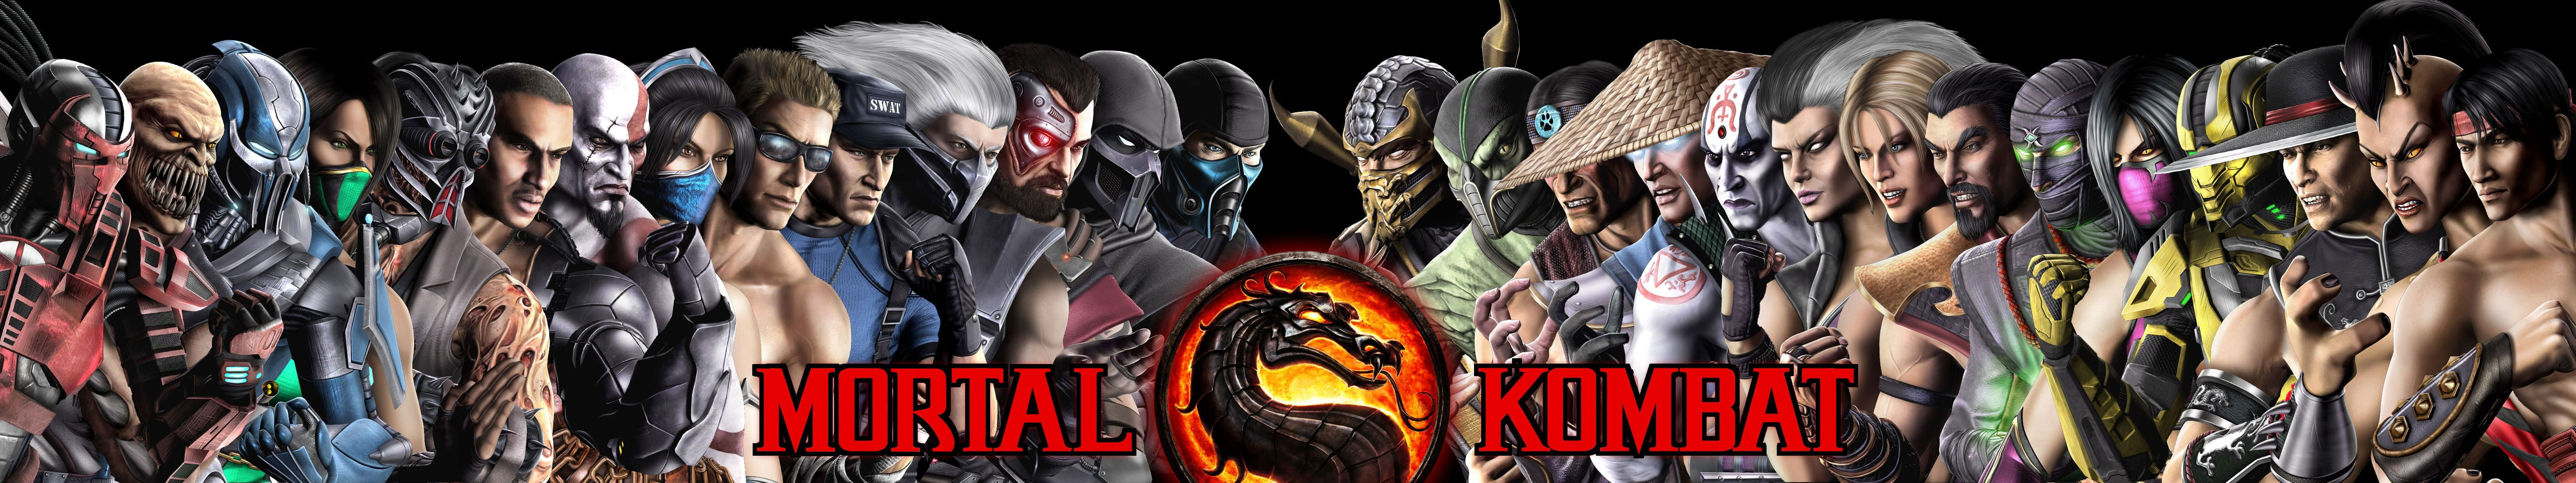 Mortal Kombat Wallpaper, Sub Zero, Mortal Kombat, Game